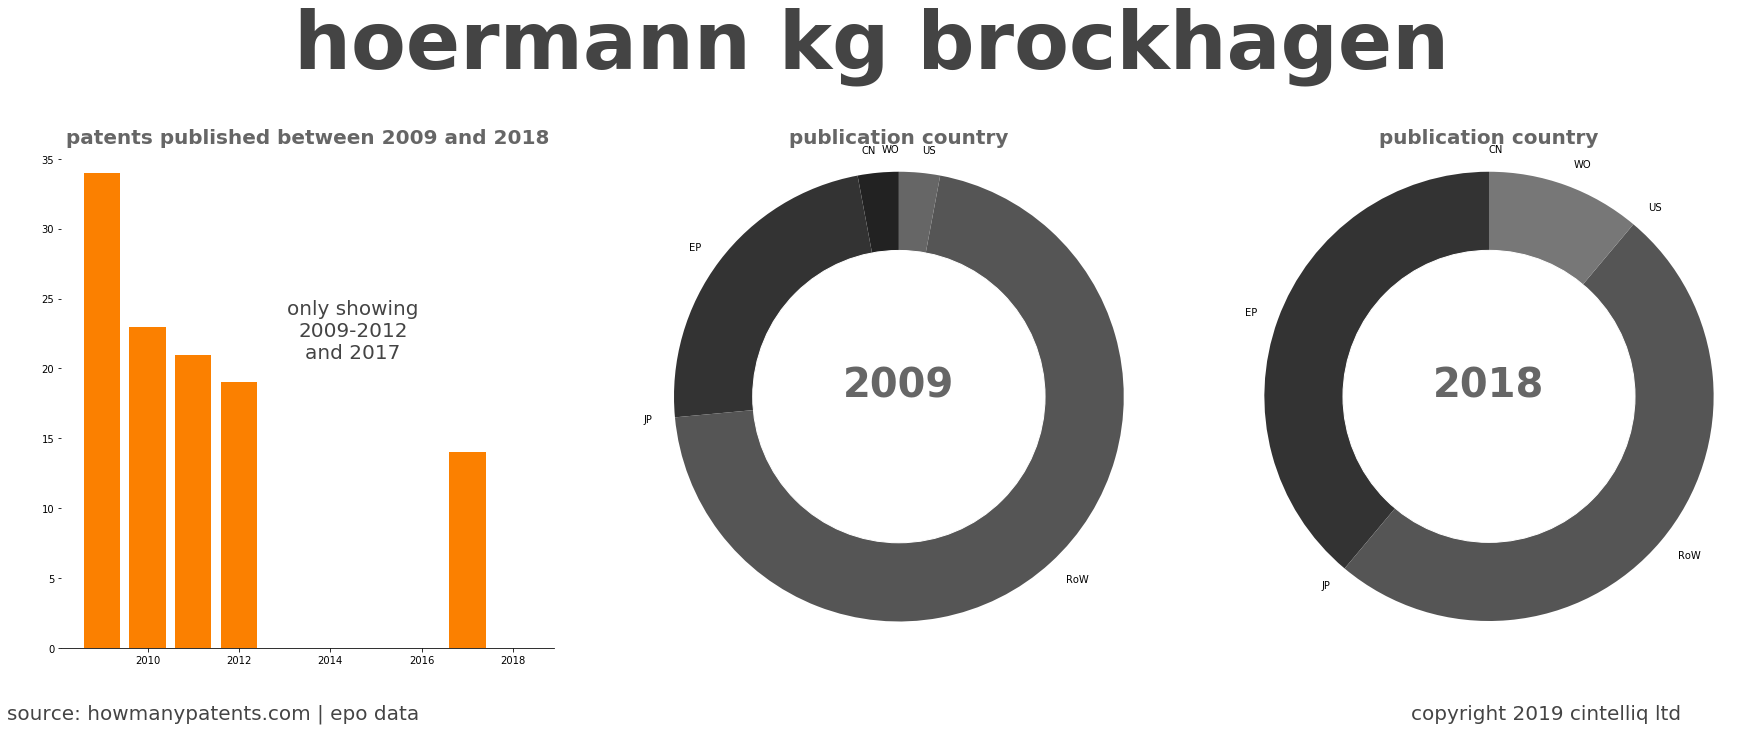 summary of patents for Hoermann Kg Brockhagen